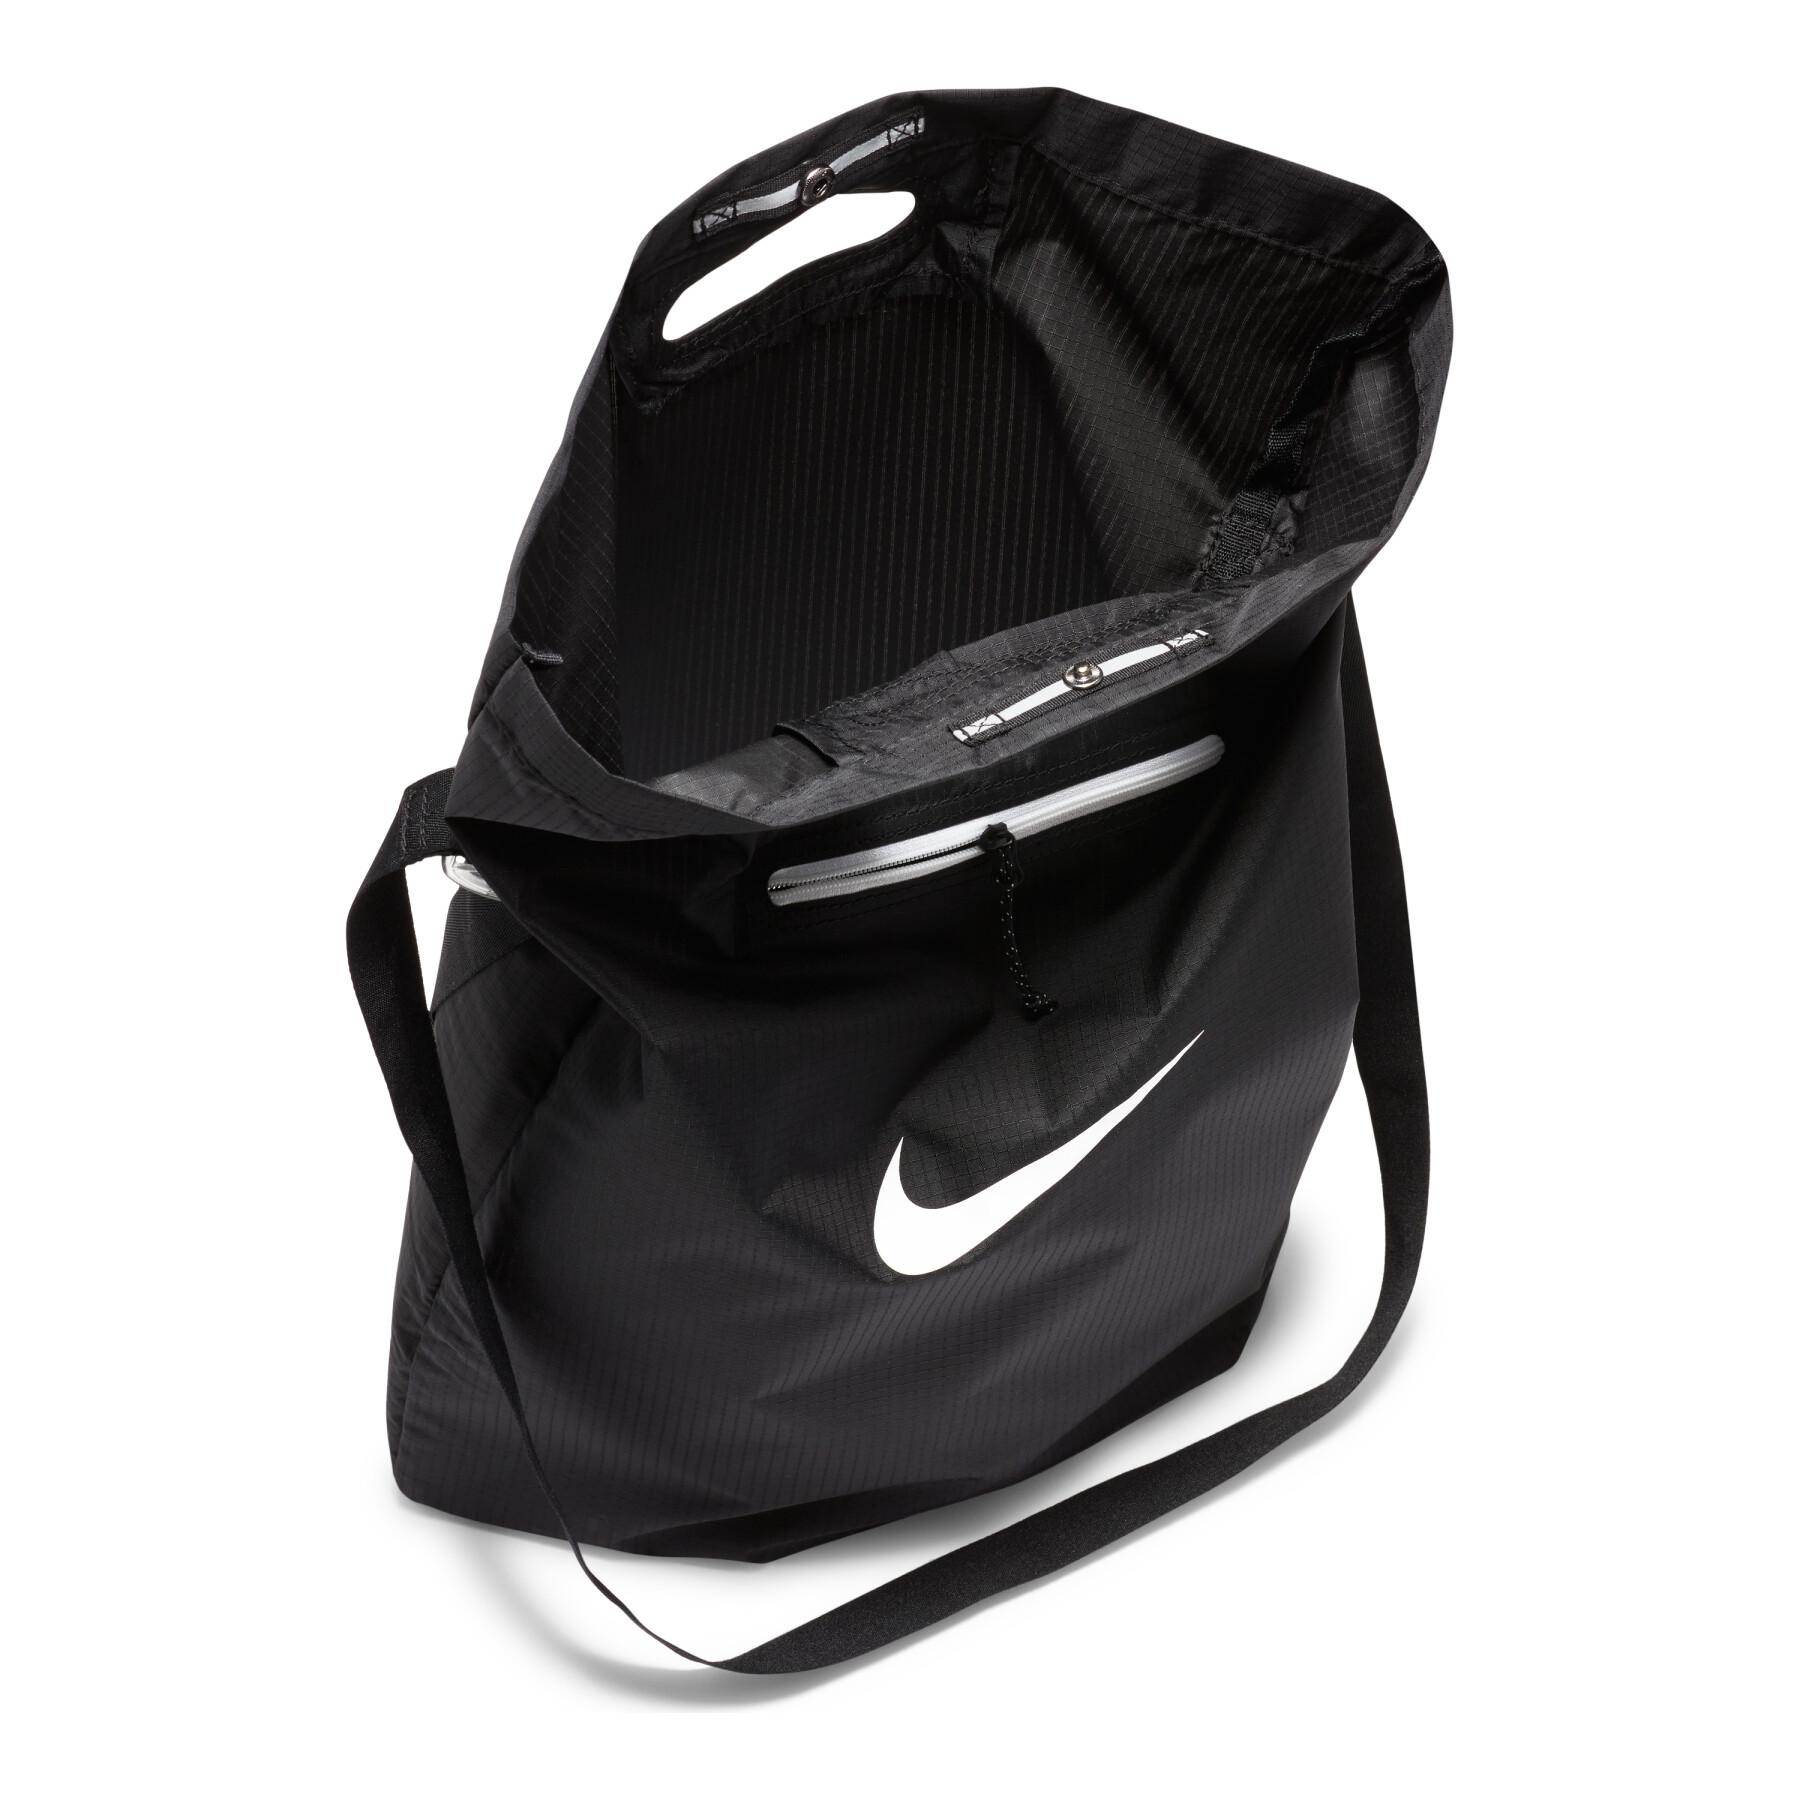 Bärbar väska Nike Stash